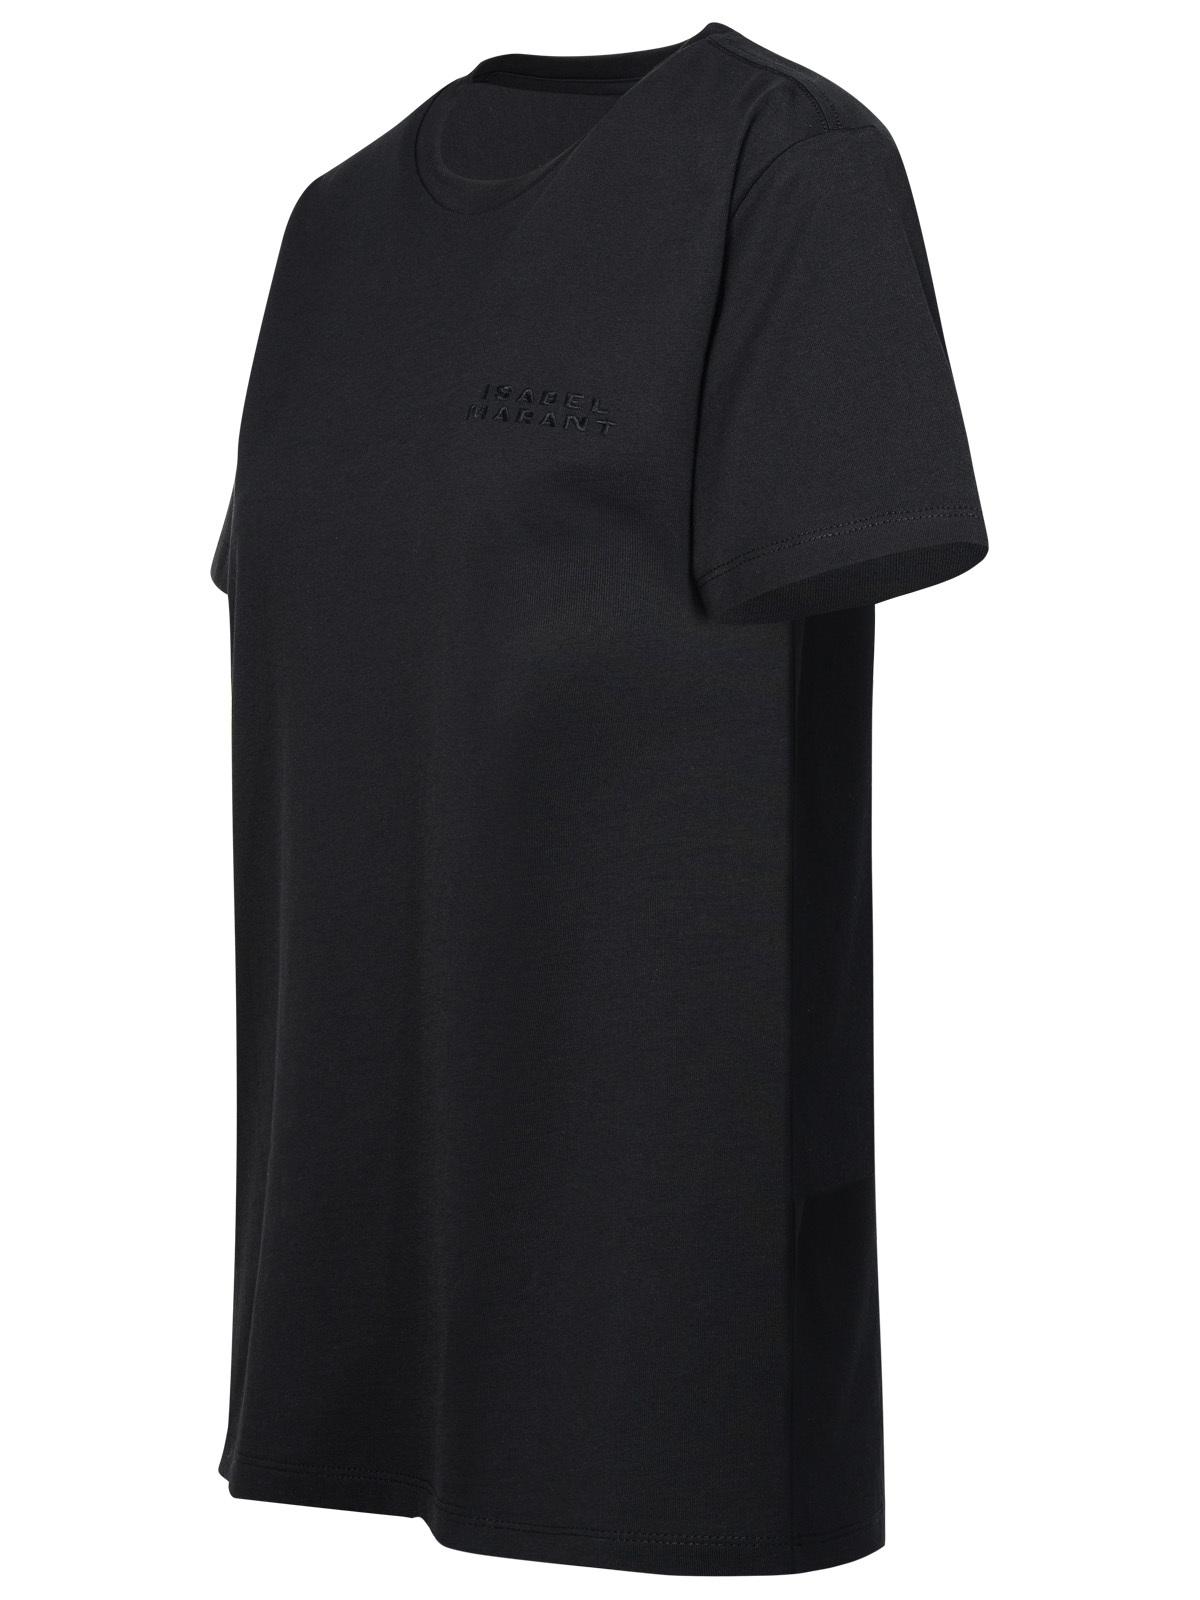 Isabel Marant 'Vidal' Black Cotton T-Shirt Woman